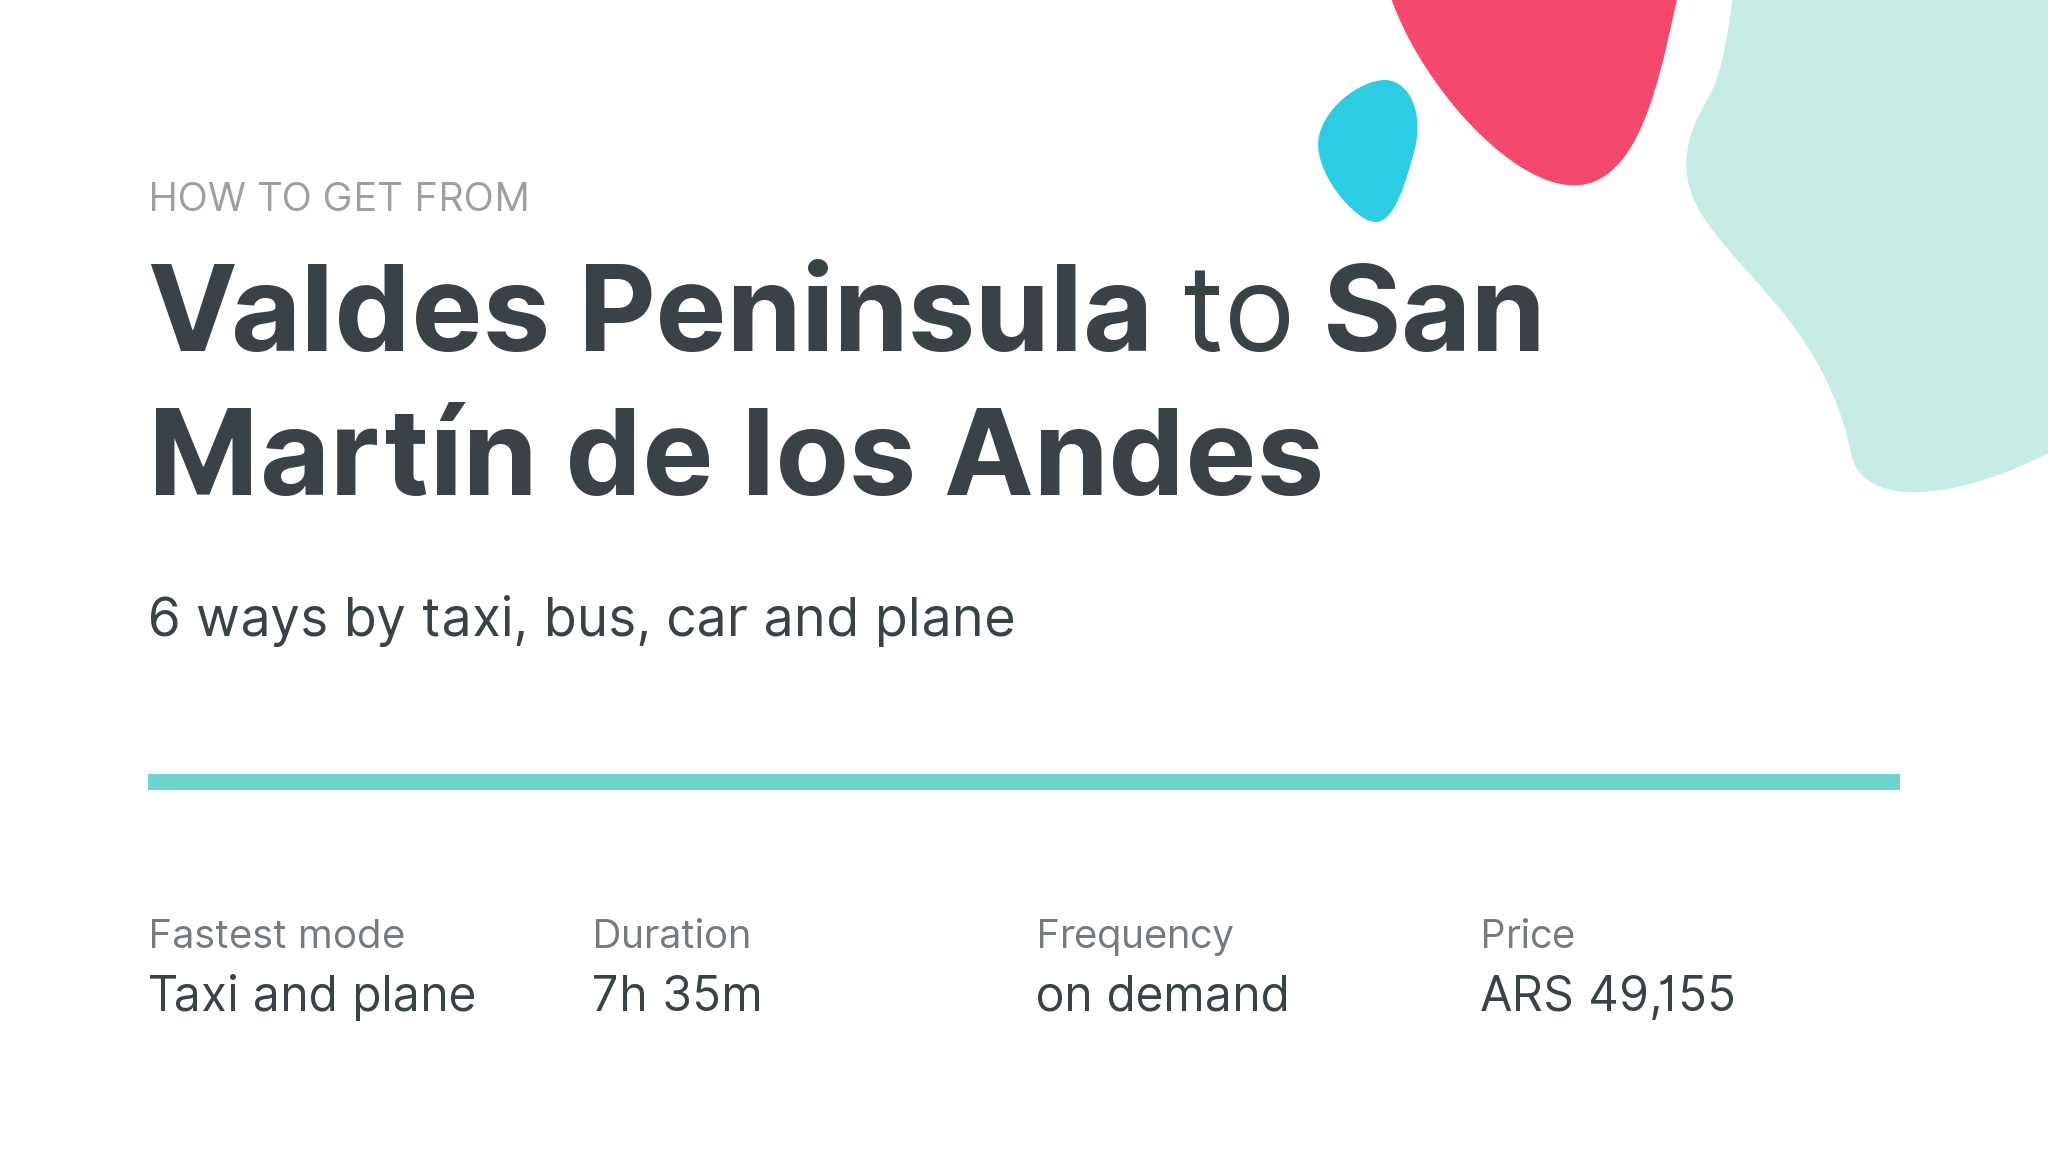 How do I get from Valdes Peninsula to San Martín de los Andes